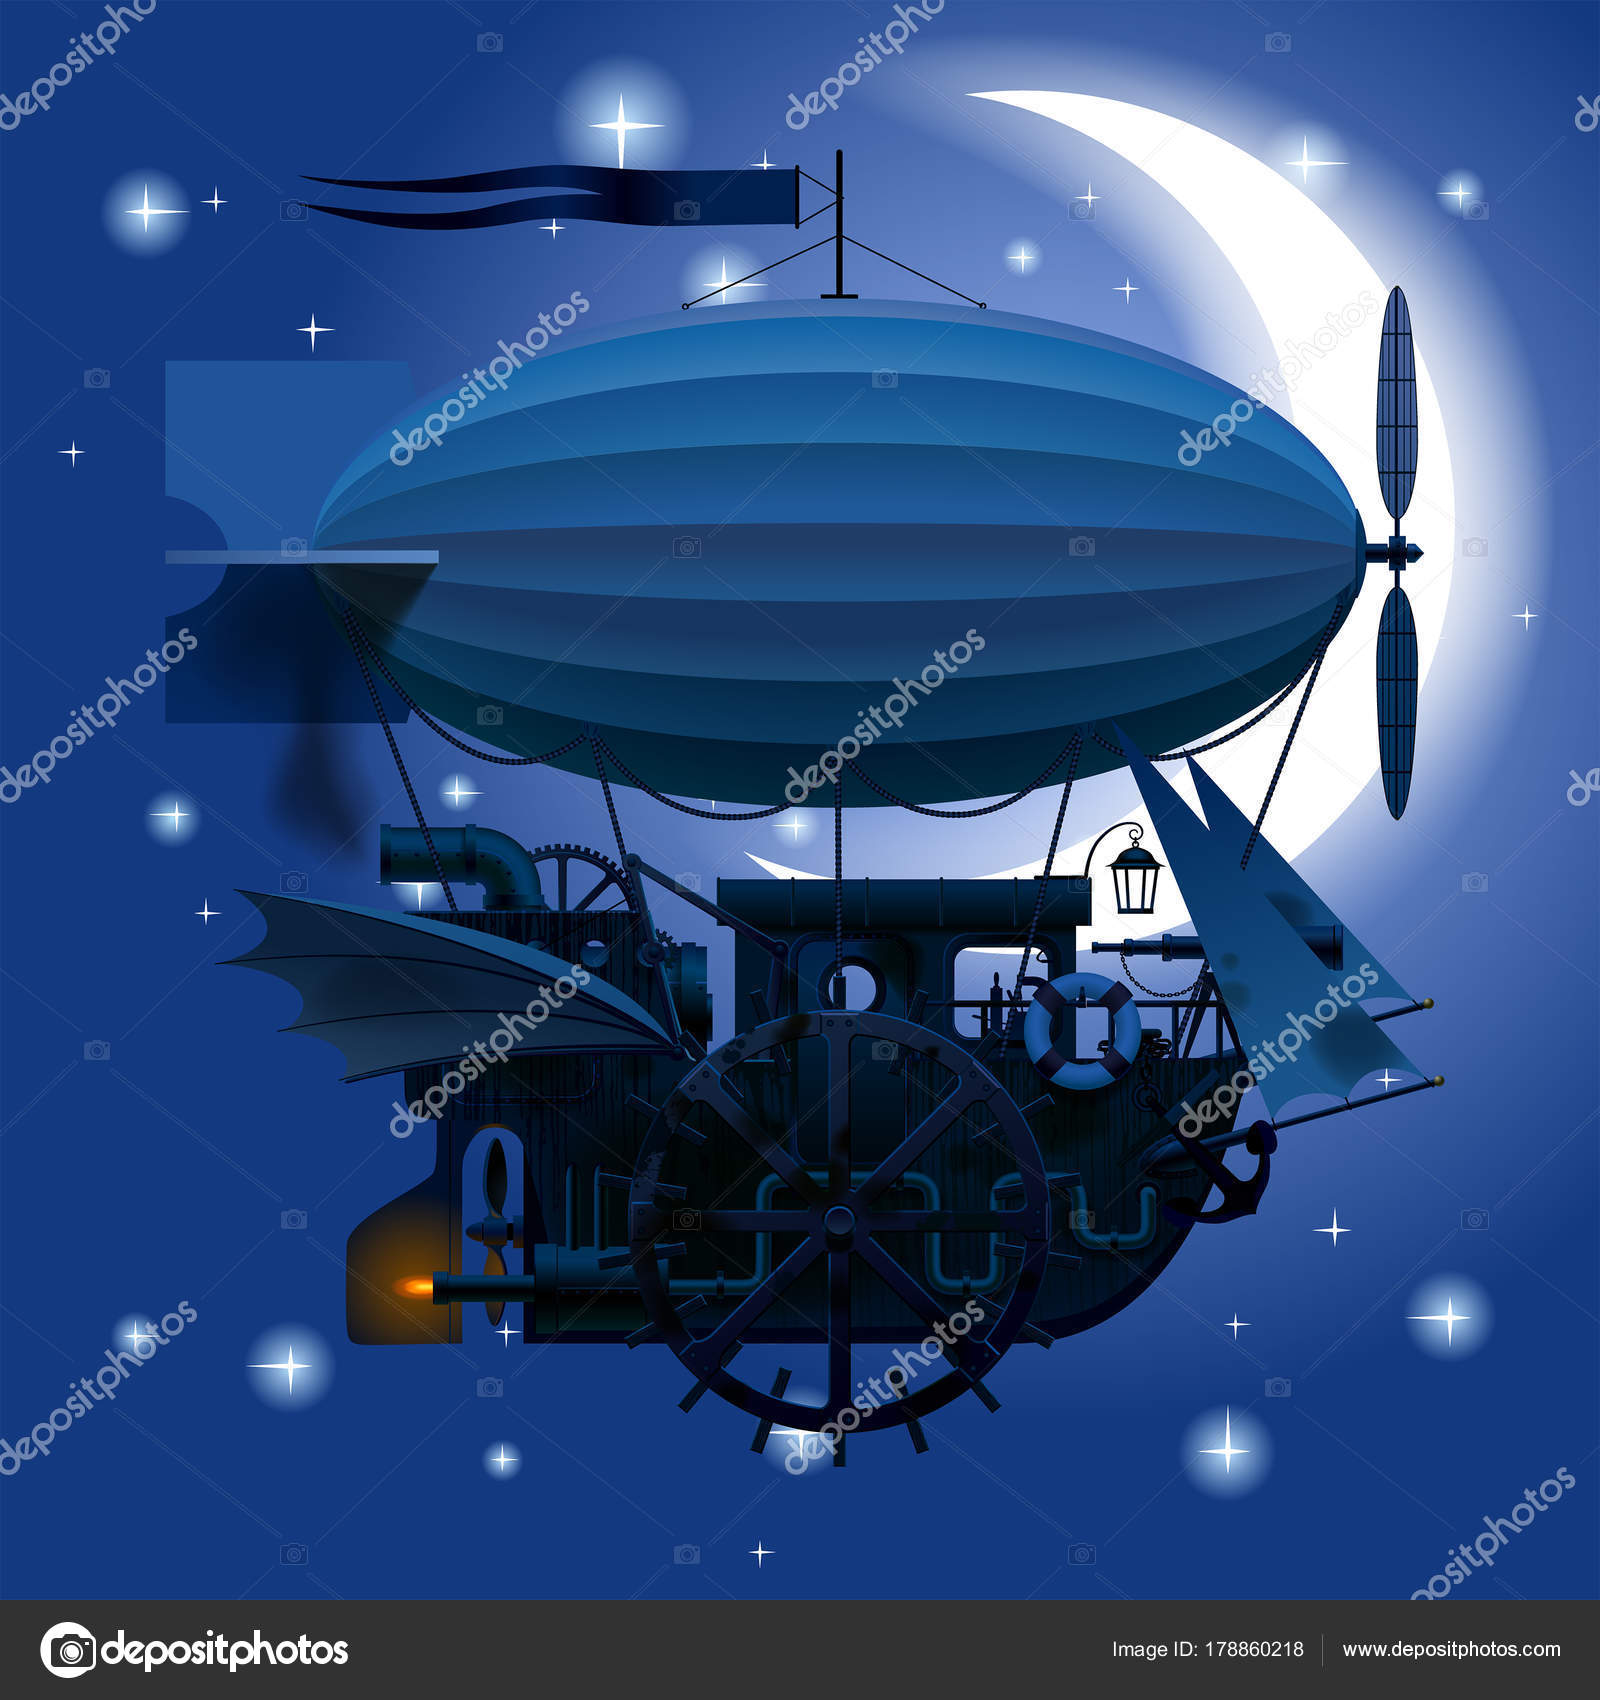 depositphotos_178860218-stock-illustration-complex-fantastic-flying-ship-in.jpg